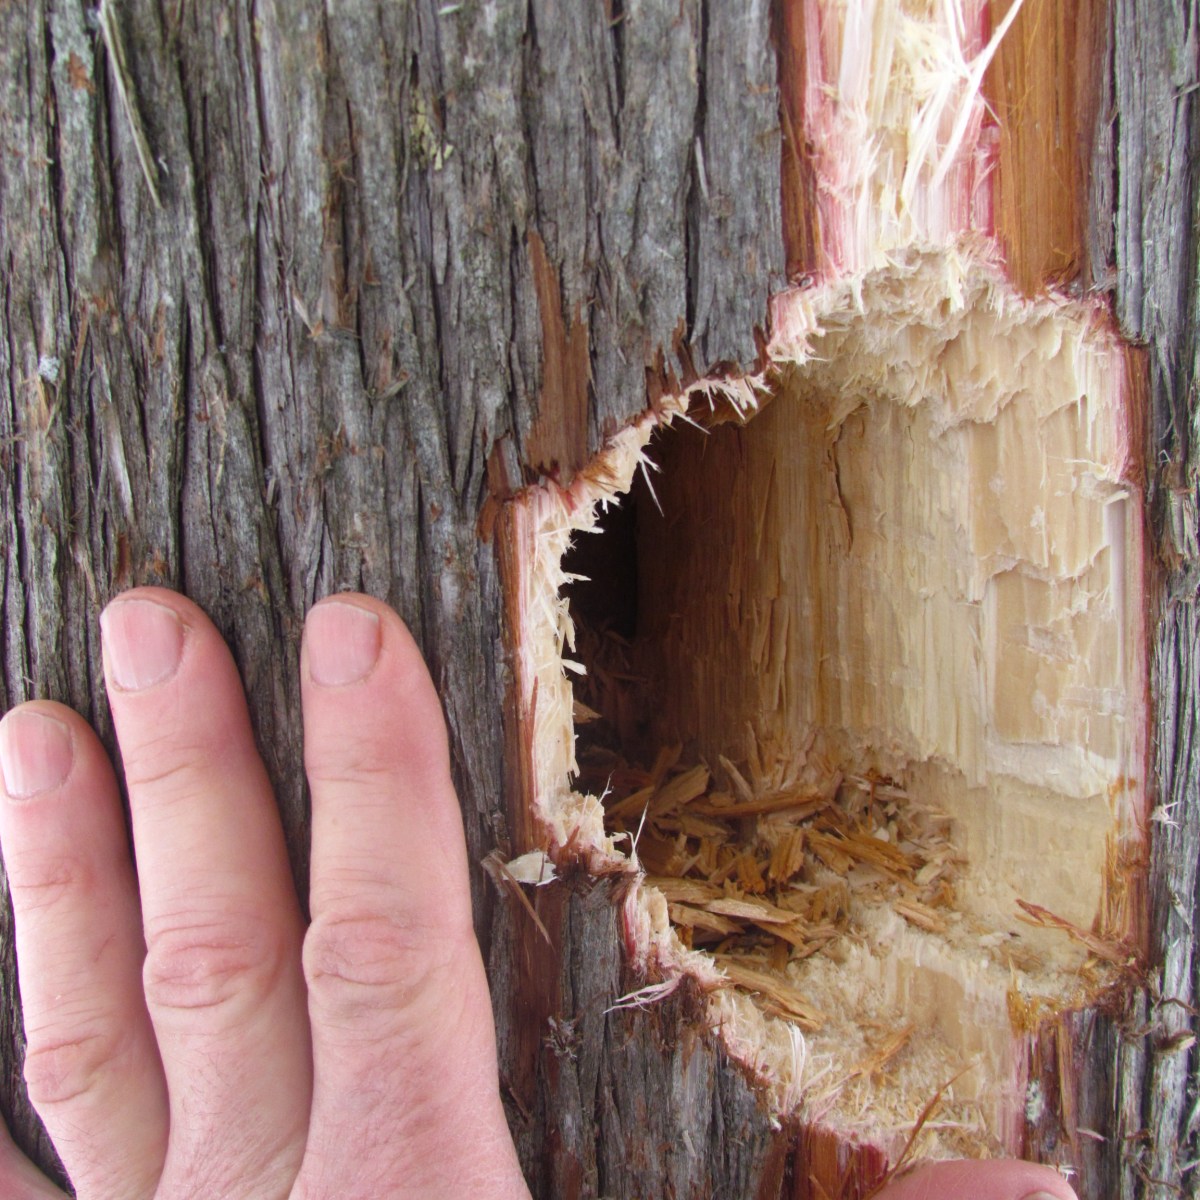 Pileated woodpecker hole in tree